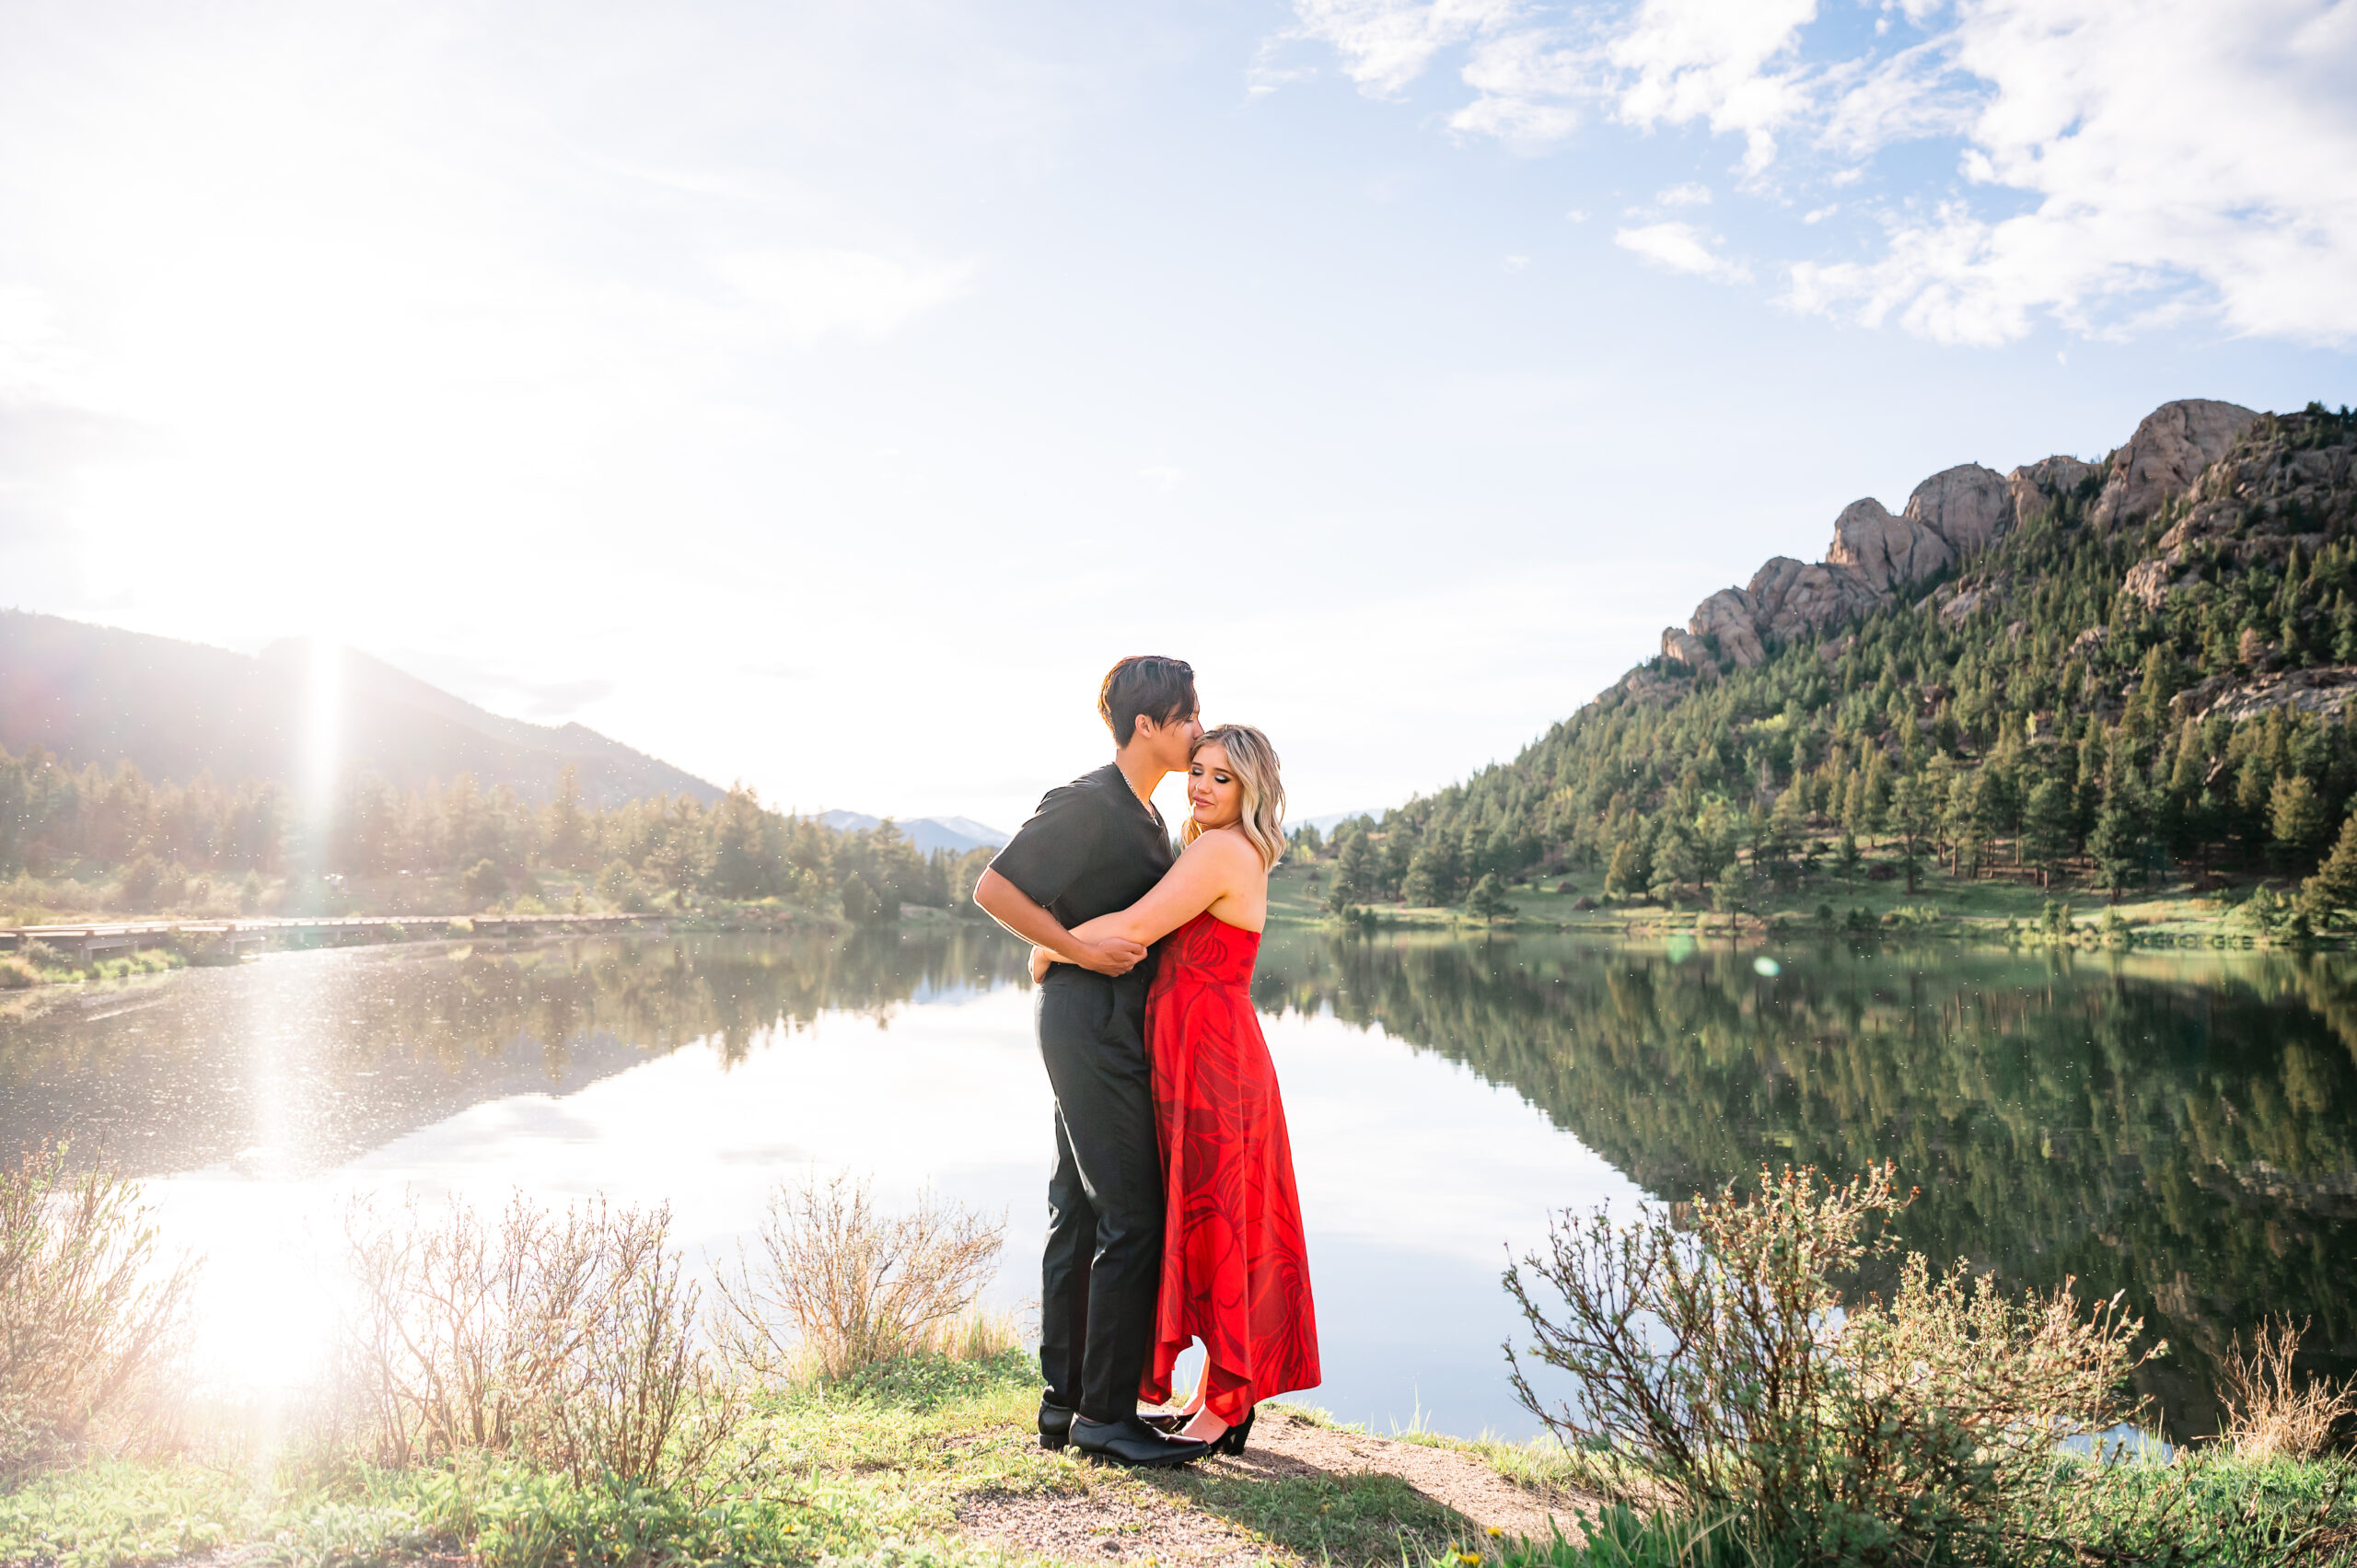 Jessie + Zach Engagement in Estes Park Colorado - Britni Girard Photography - Destination Photographer